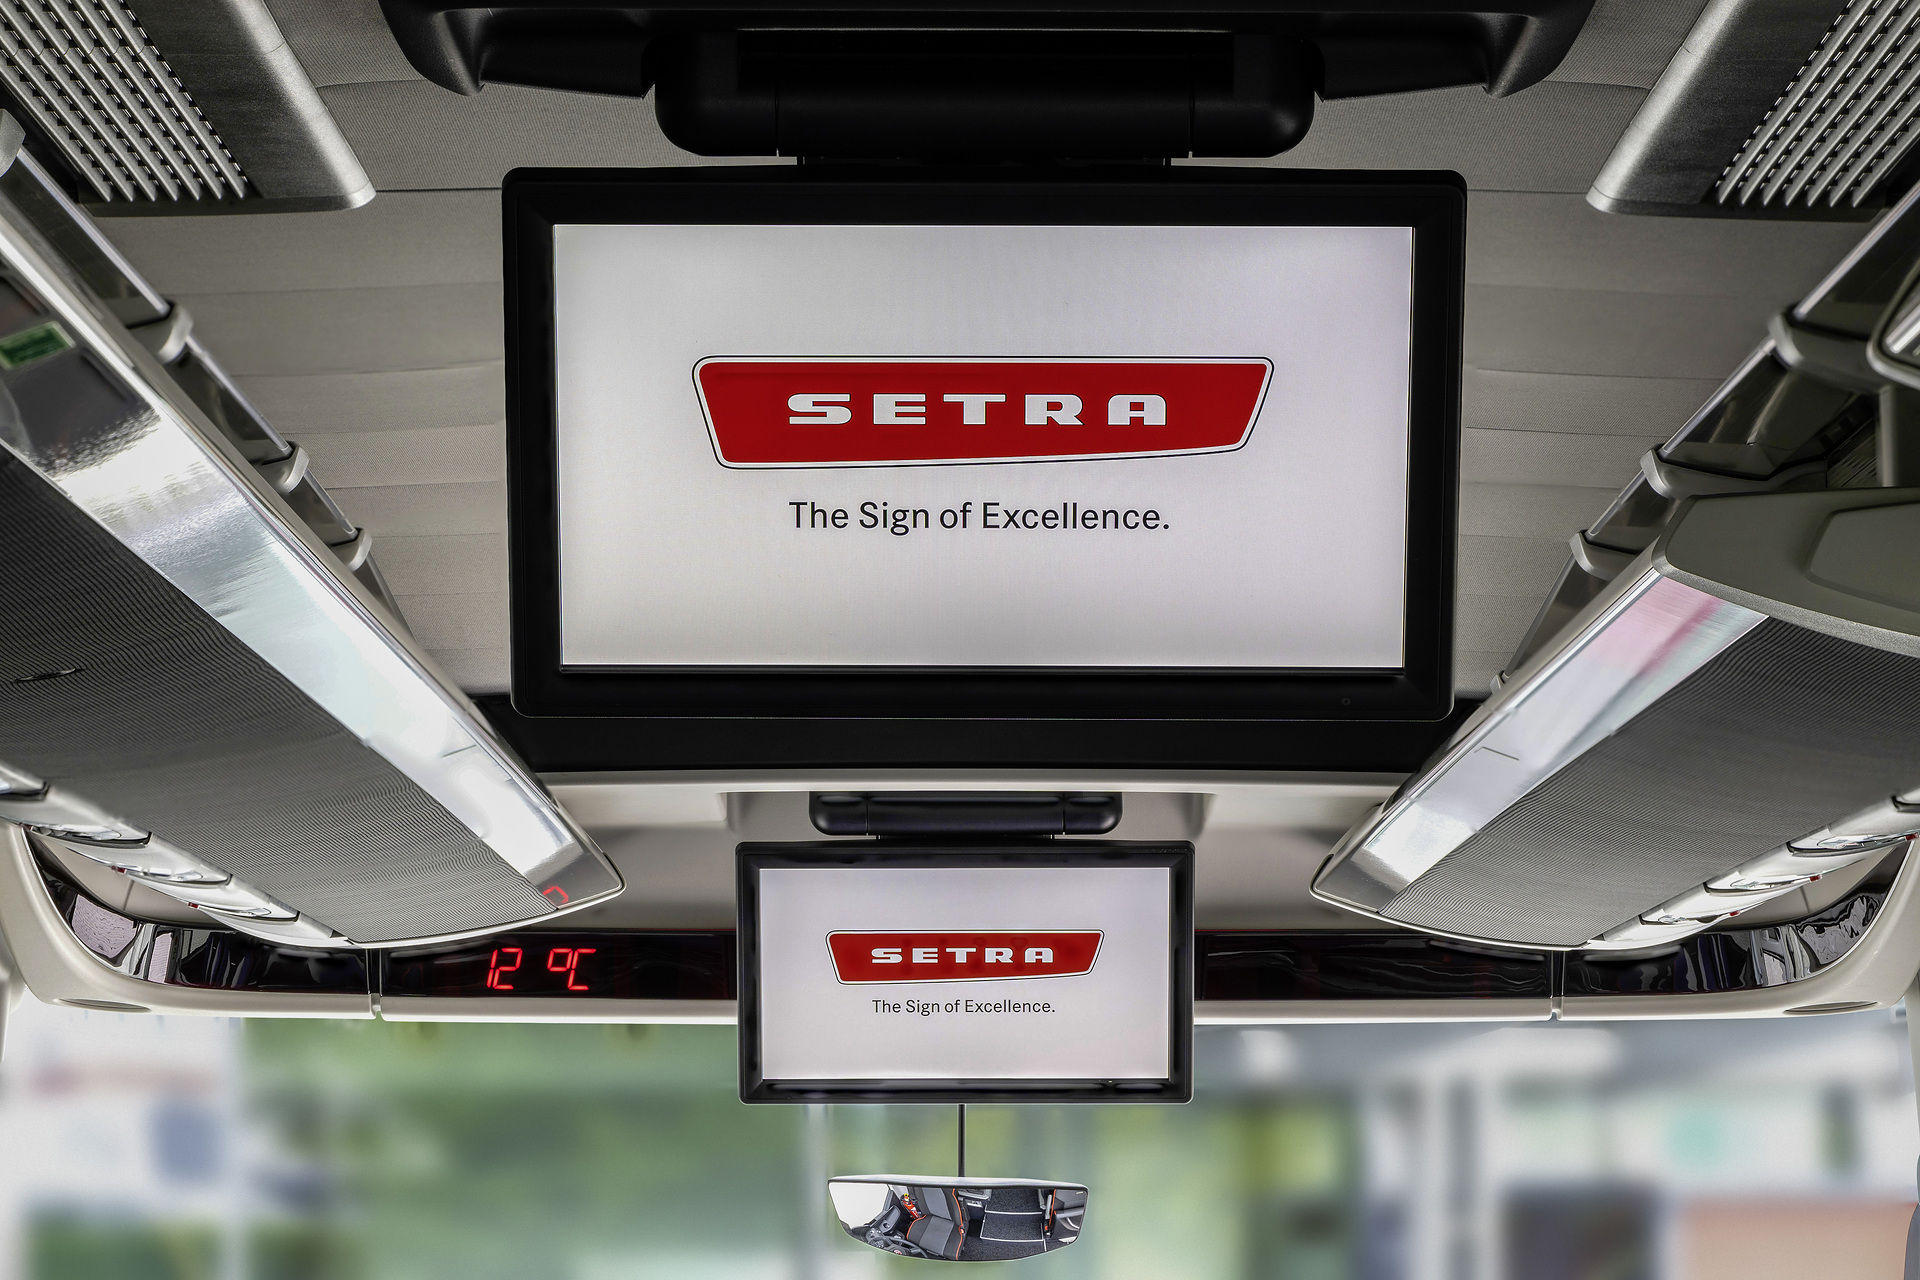 Setra S 515 HD test vehicle